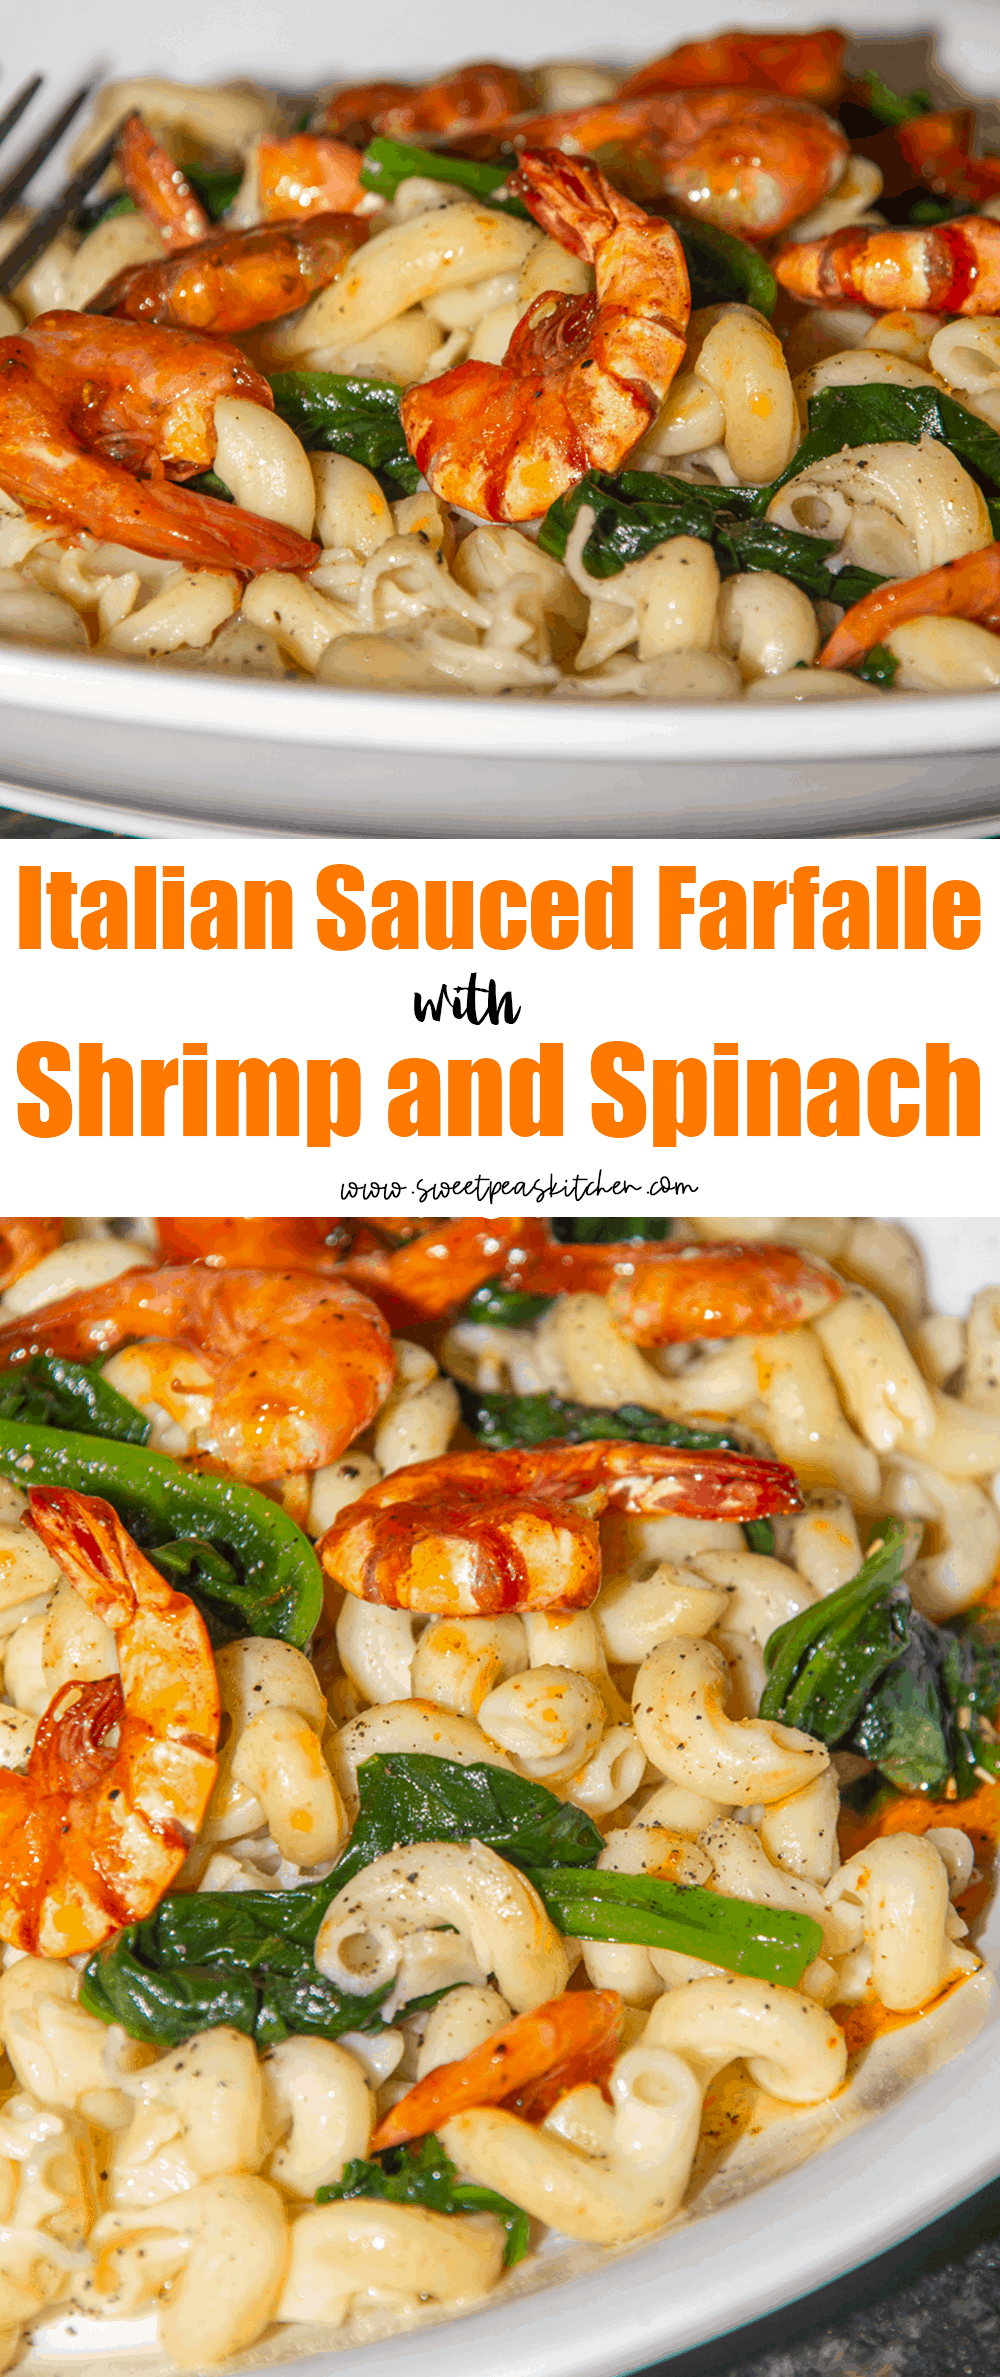 Italian Sauced Farfalle with Shrimp and Spinach